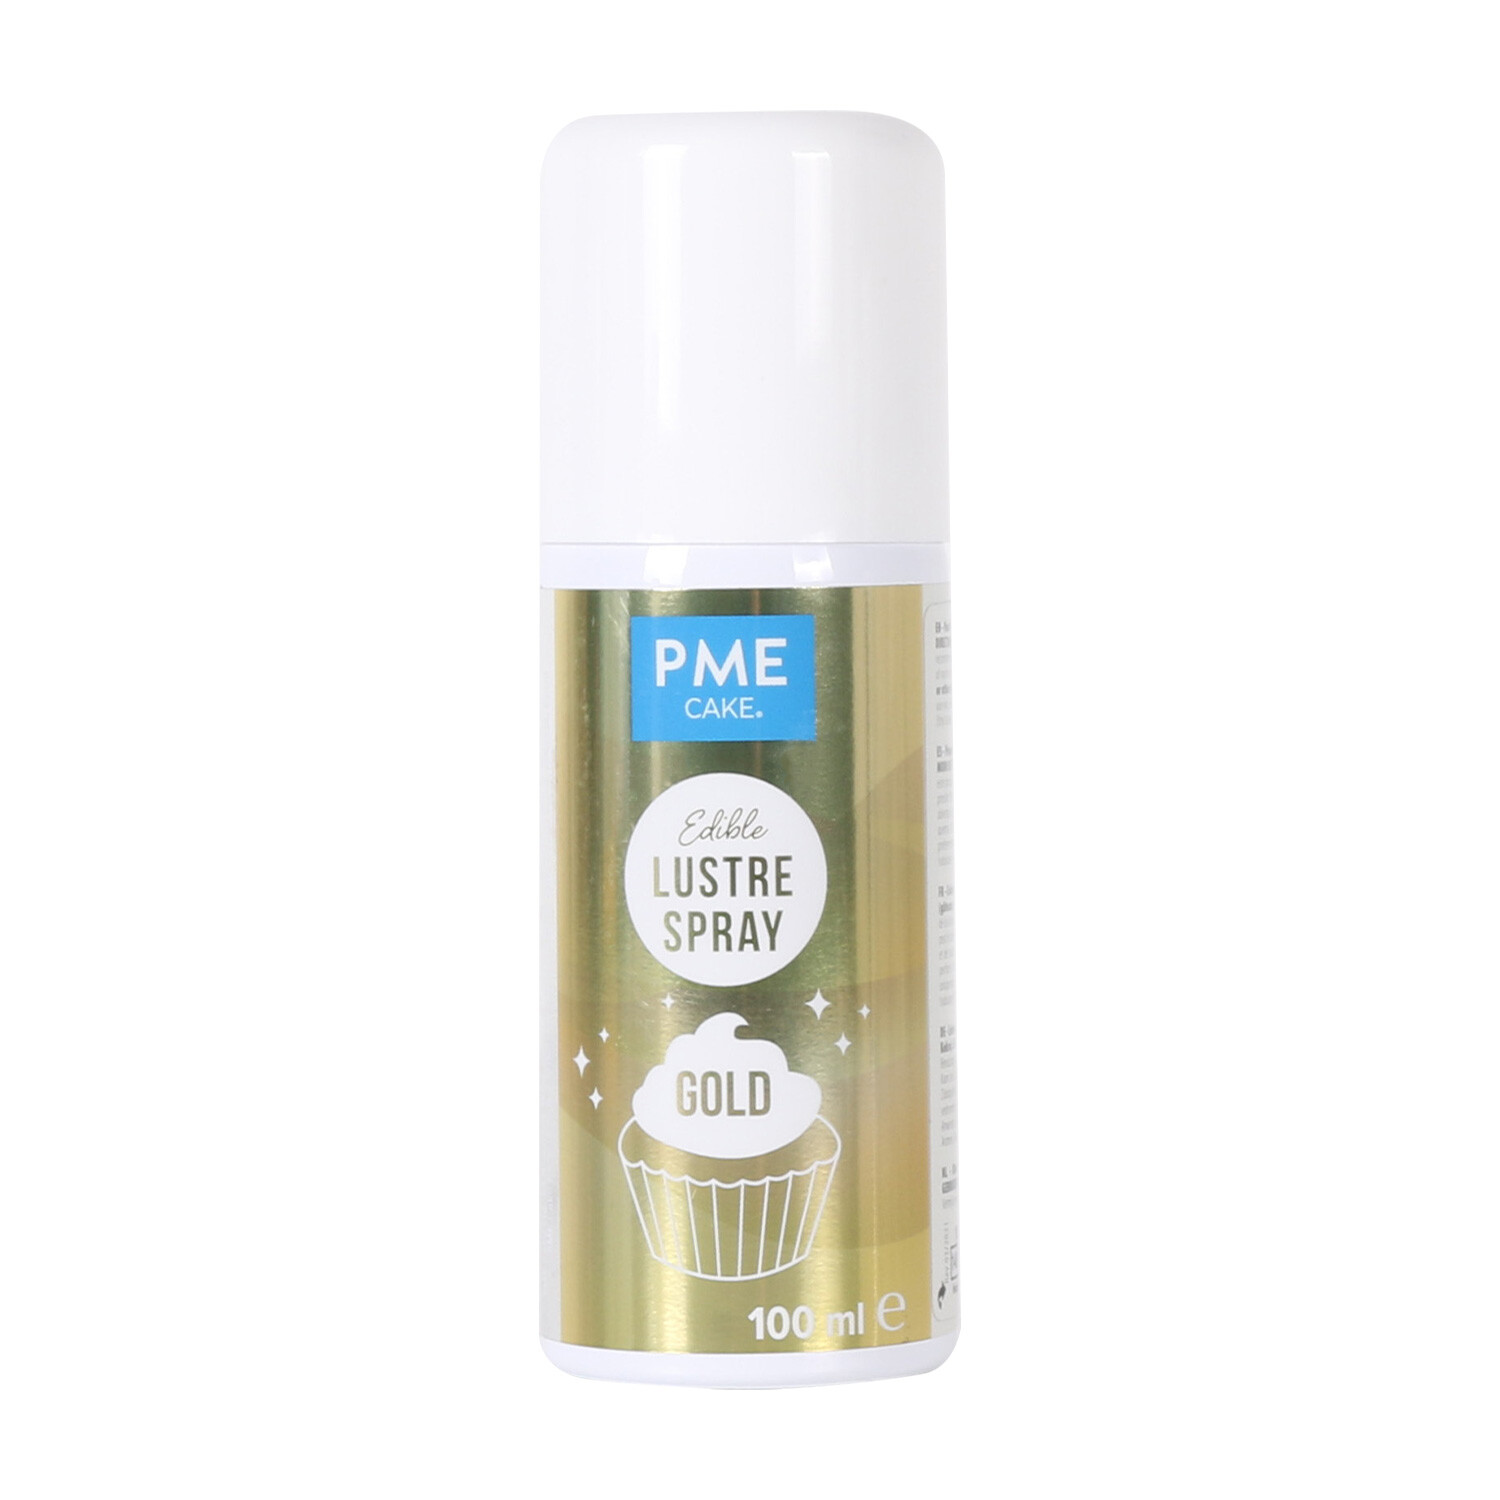 PME Edible Lustre Spray - Gold Image